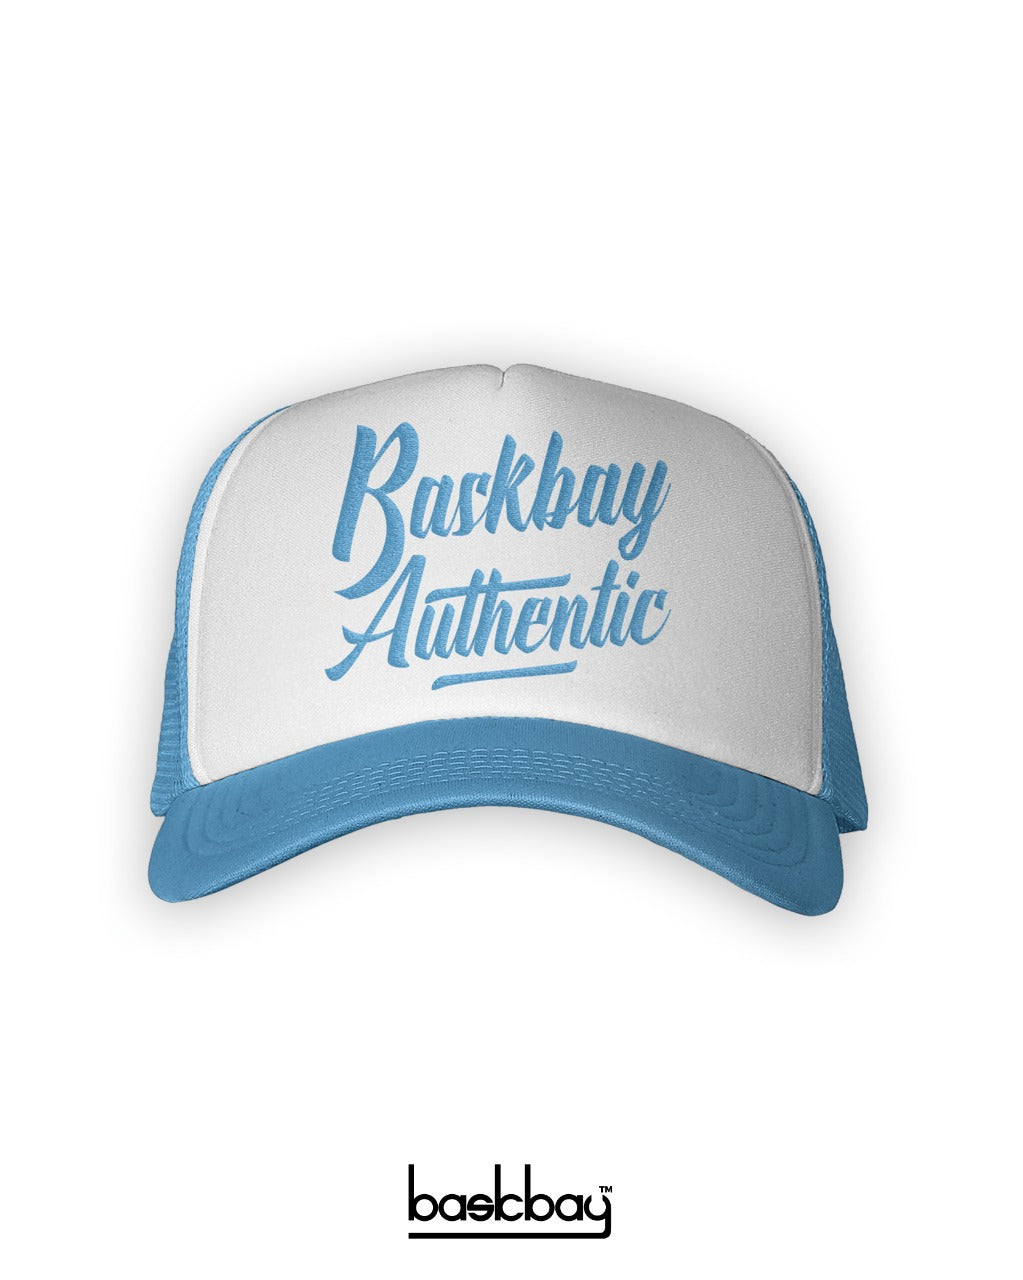 Baskbay Authentic Trucker Cap